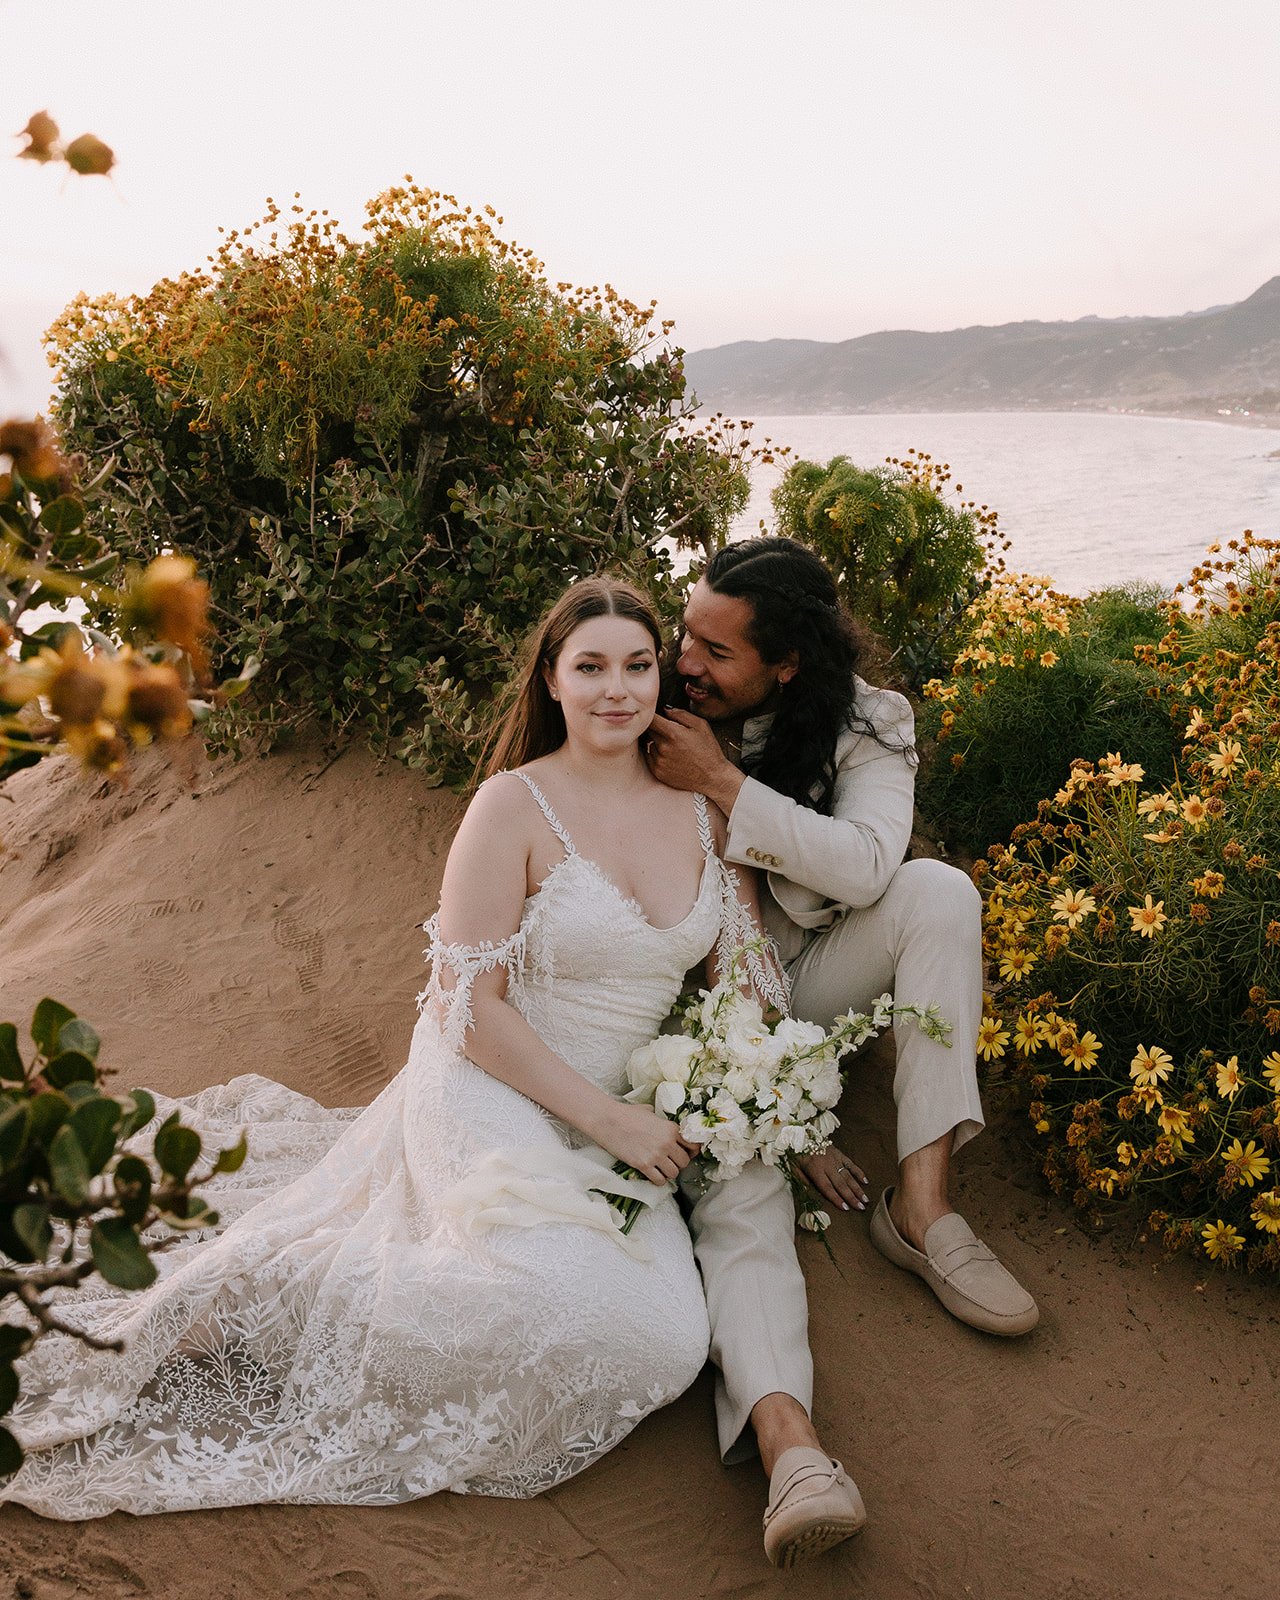 Intimate Malibu Elopement on The Beach - Natalie Nicole Photo - Destination Wedding Photographer (123).jpg